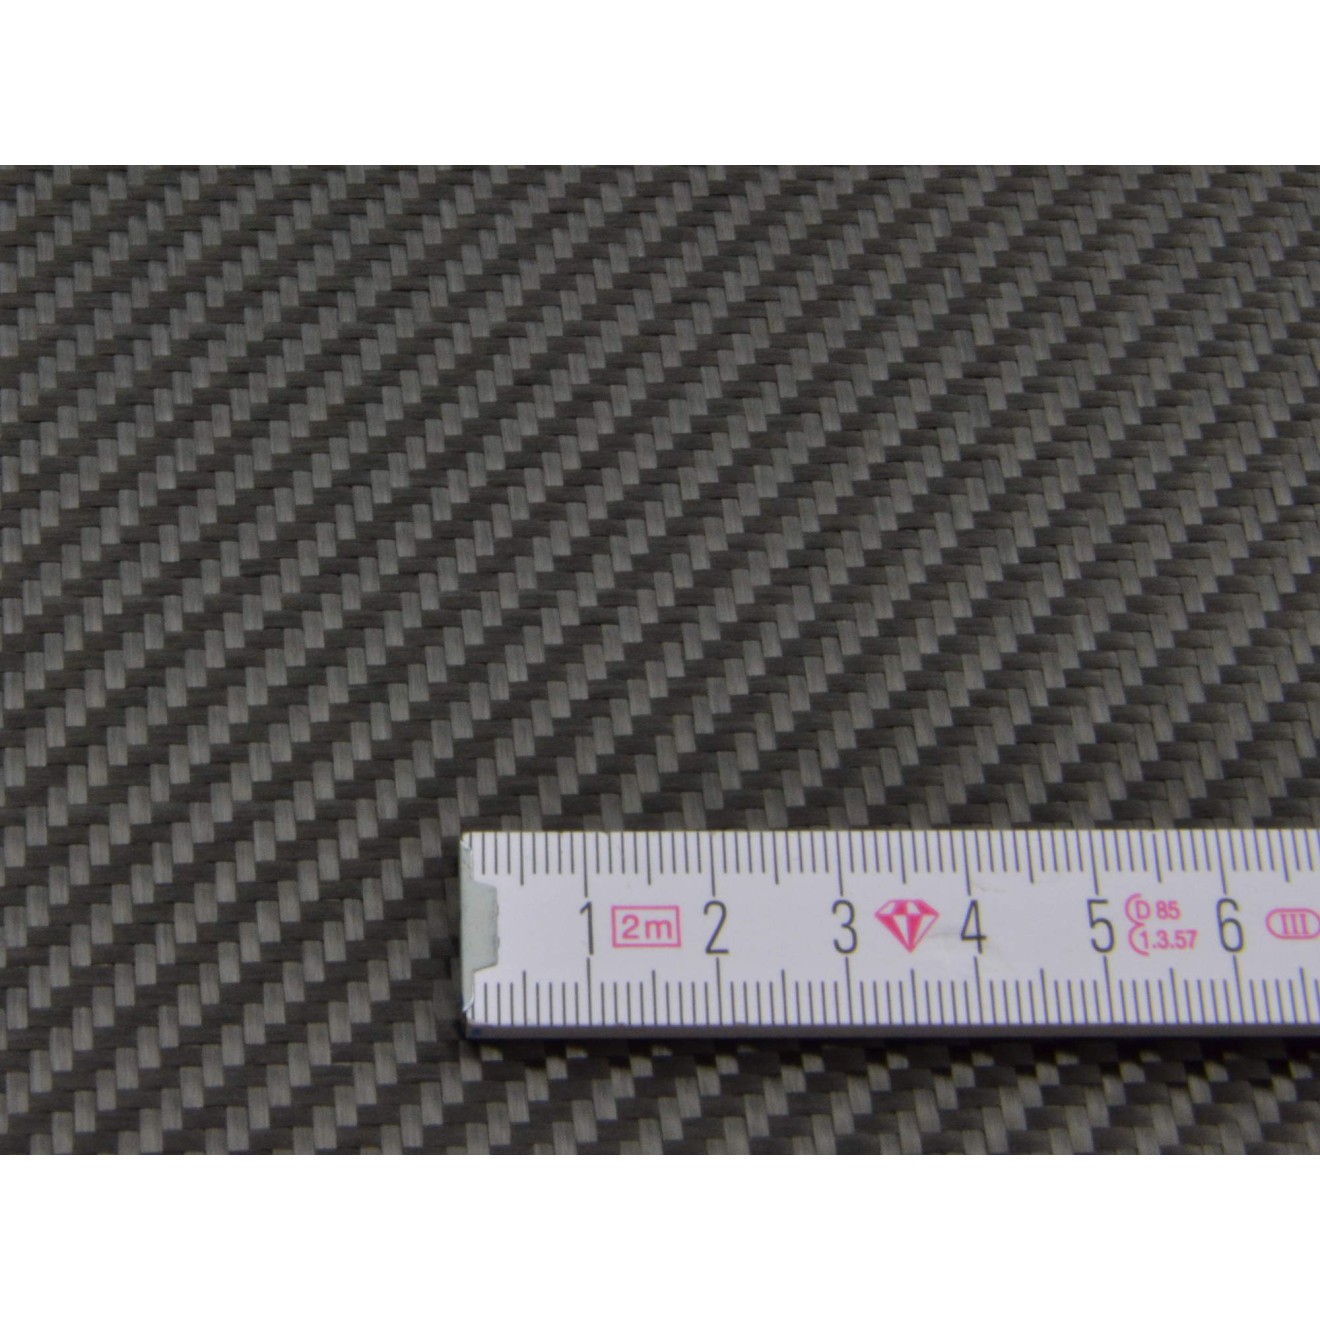 Woven carbon fiber fabric 3K 245g/m² twill2/2, roll 100m